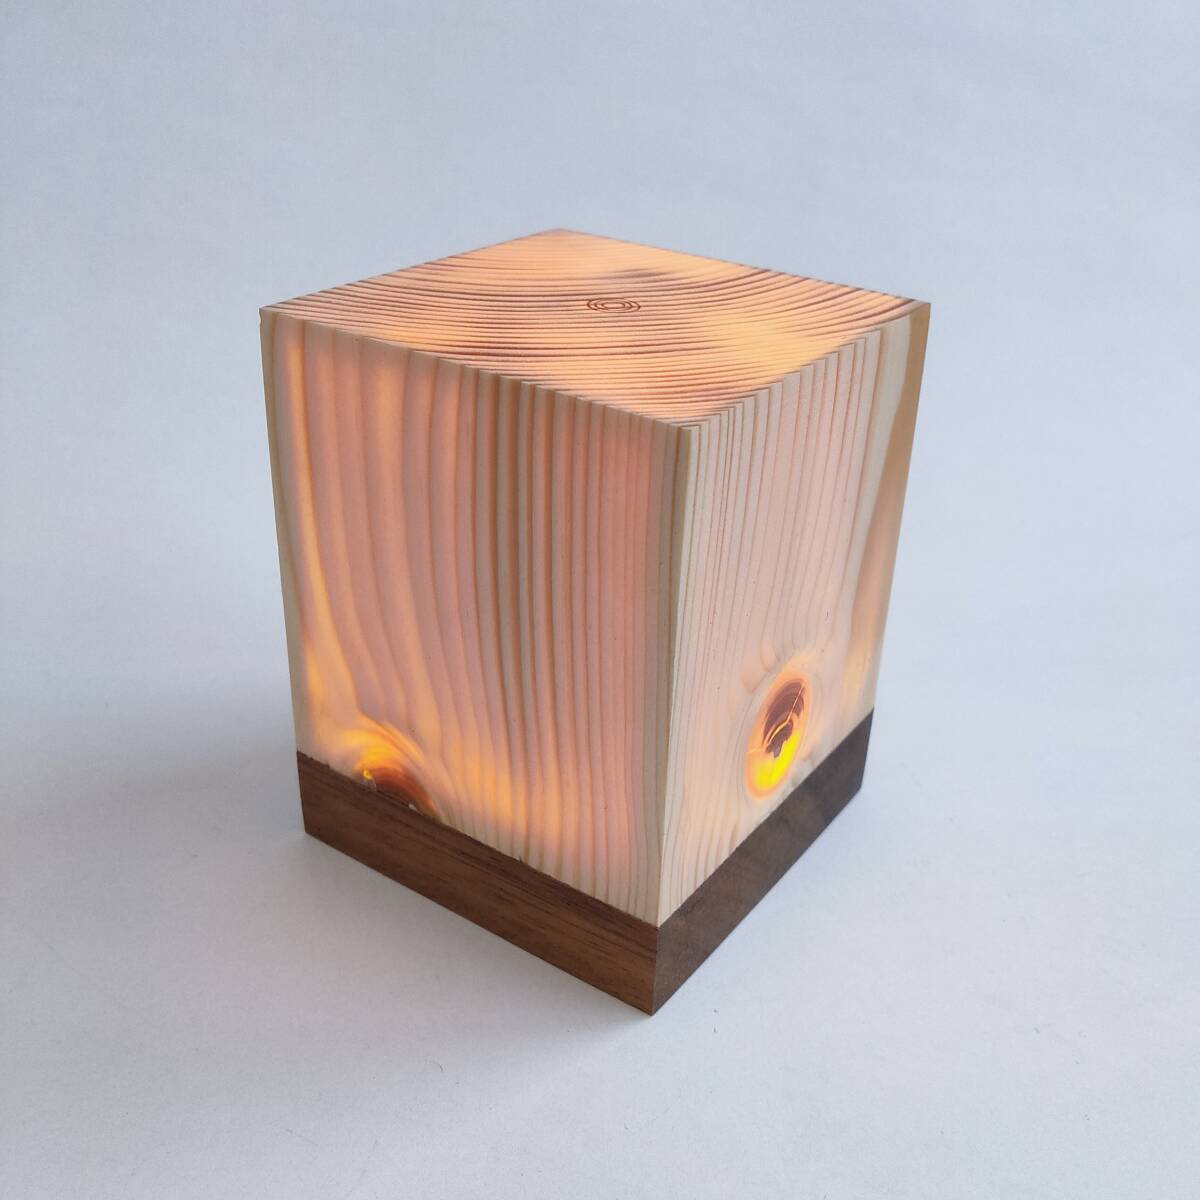 [ one jpy start ]Wood Block Lamp wood lamp wooden lamp Night light [1 jpy ]AKI01_2549